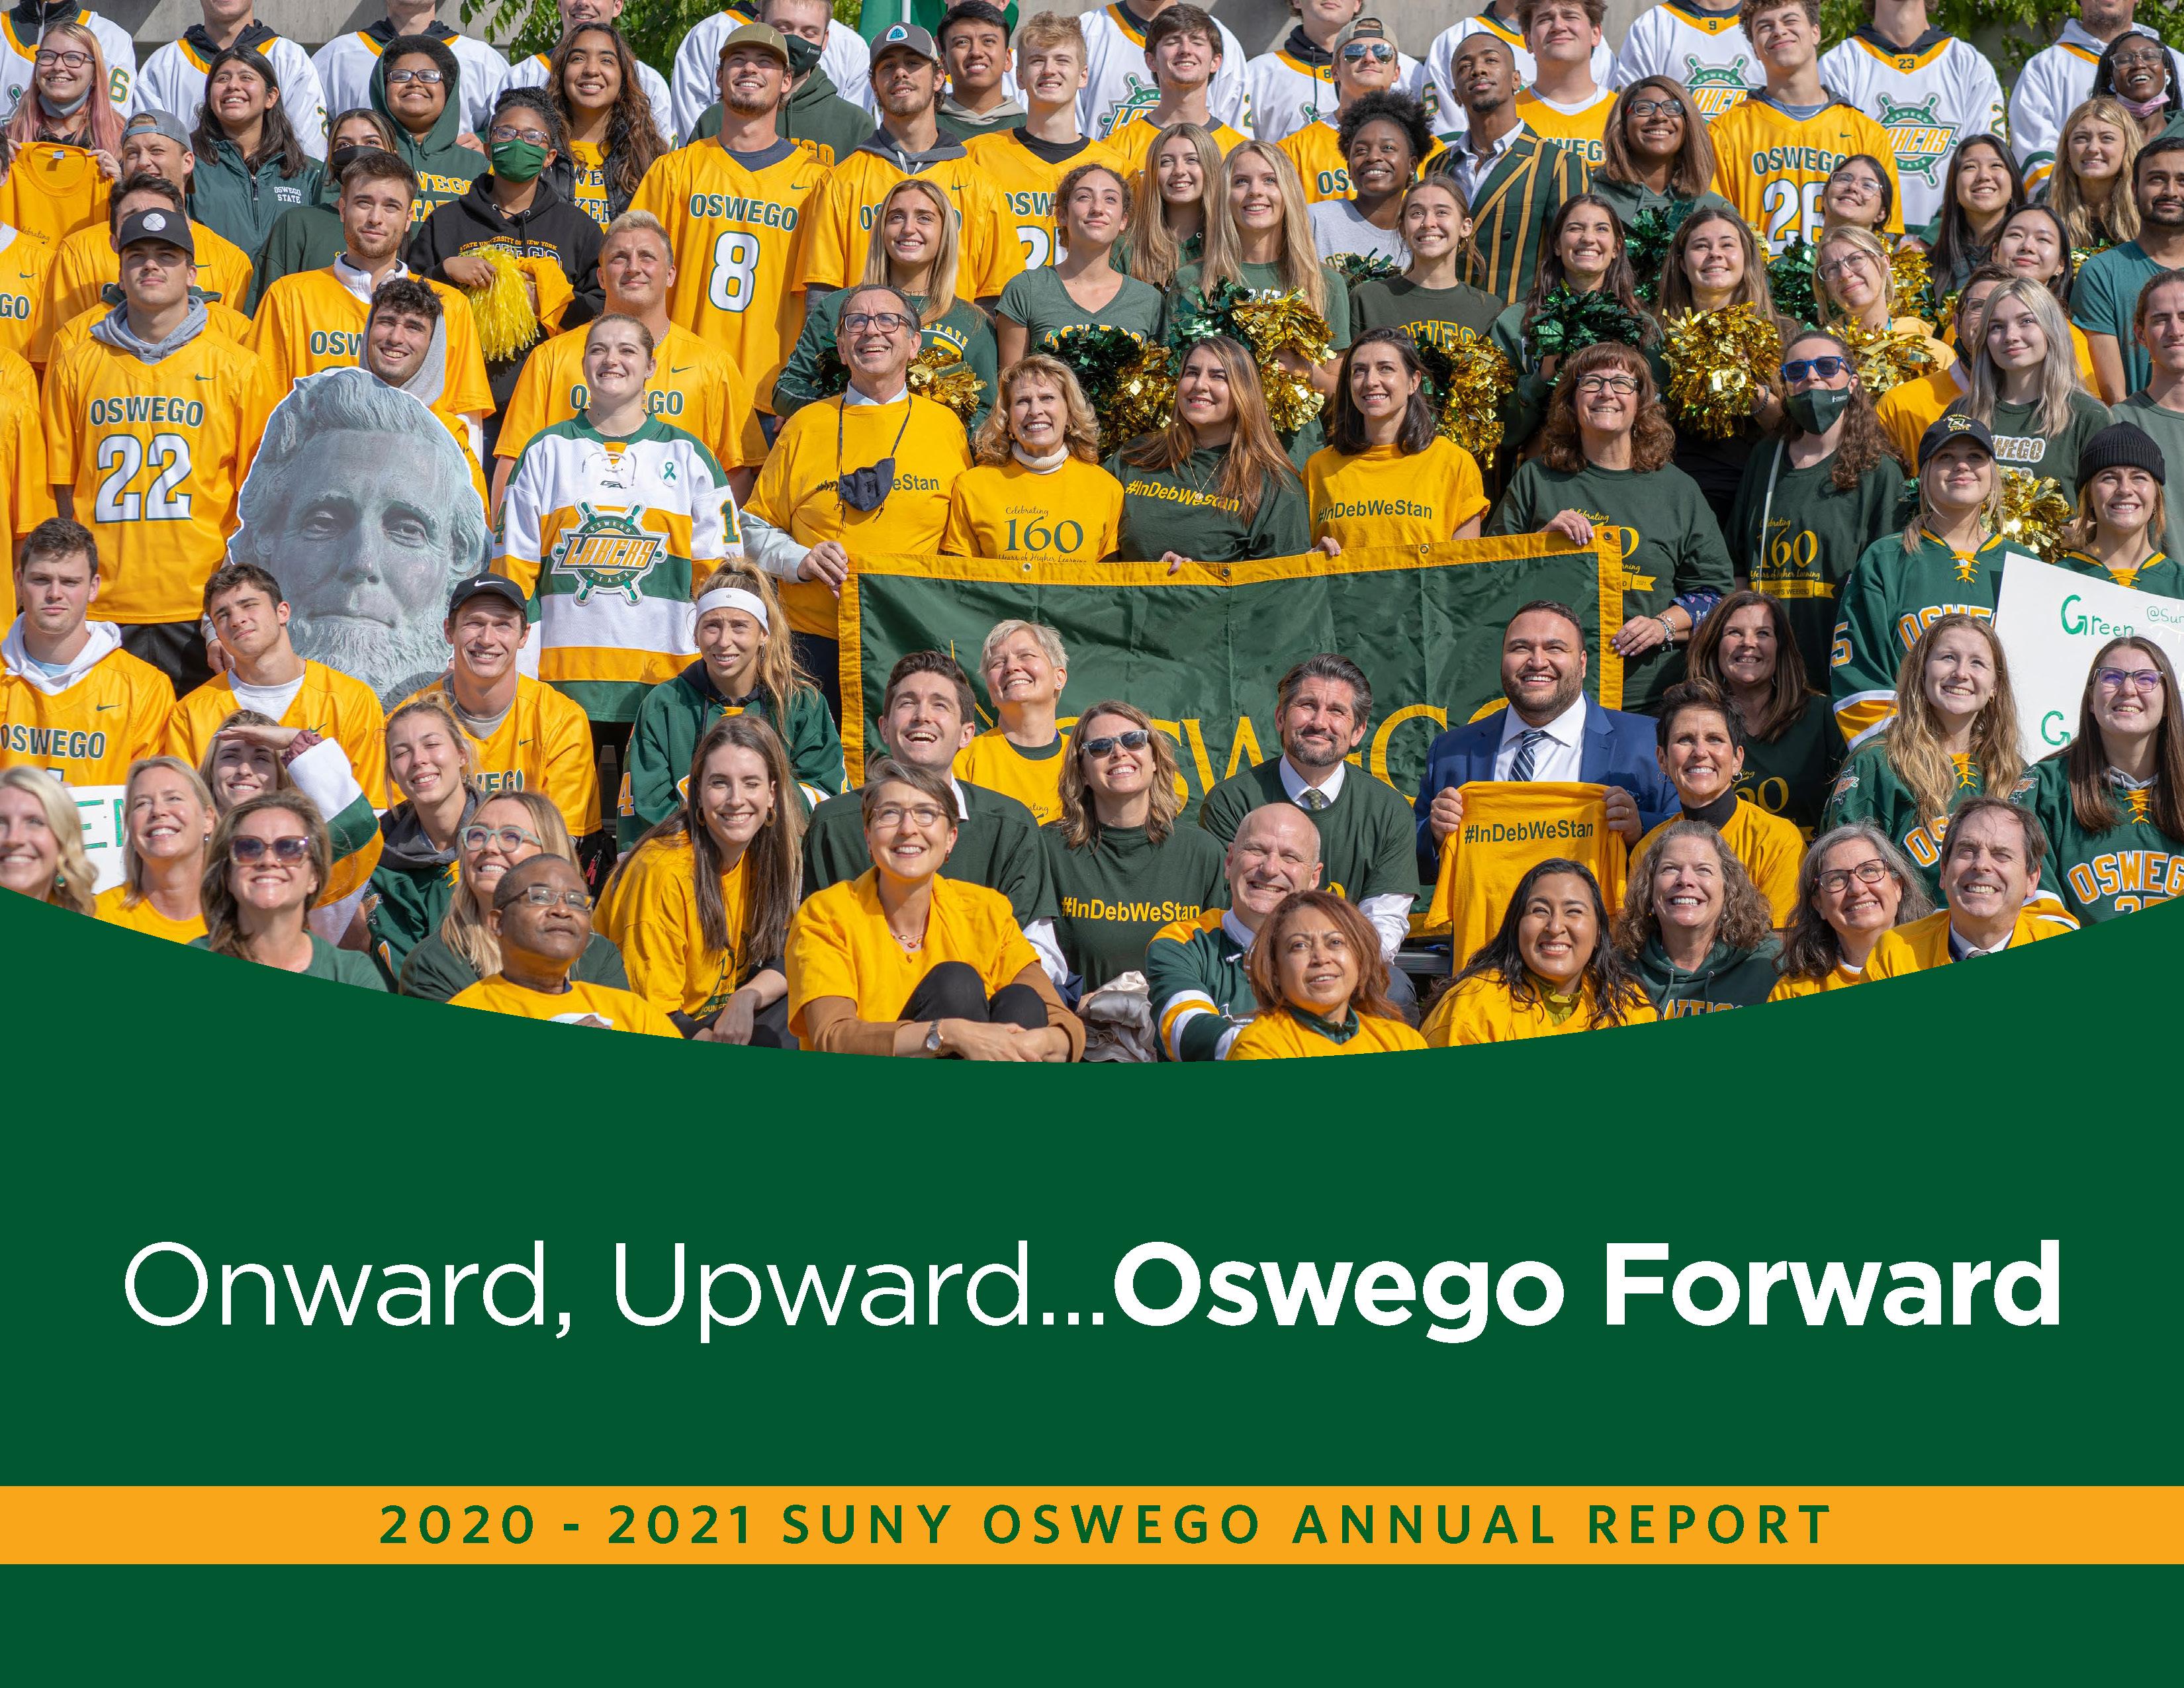 SUNY Oswego Annual Report Cover: Onward, Upward, Oswego Forward